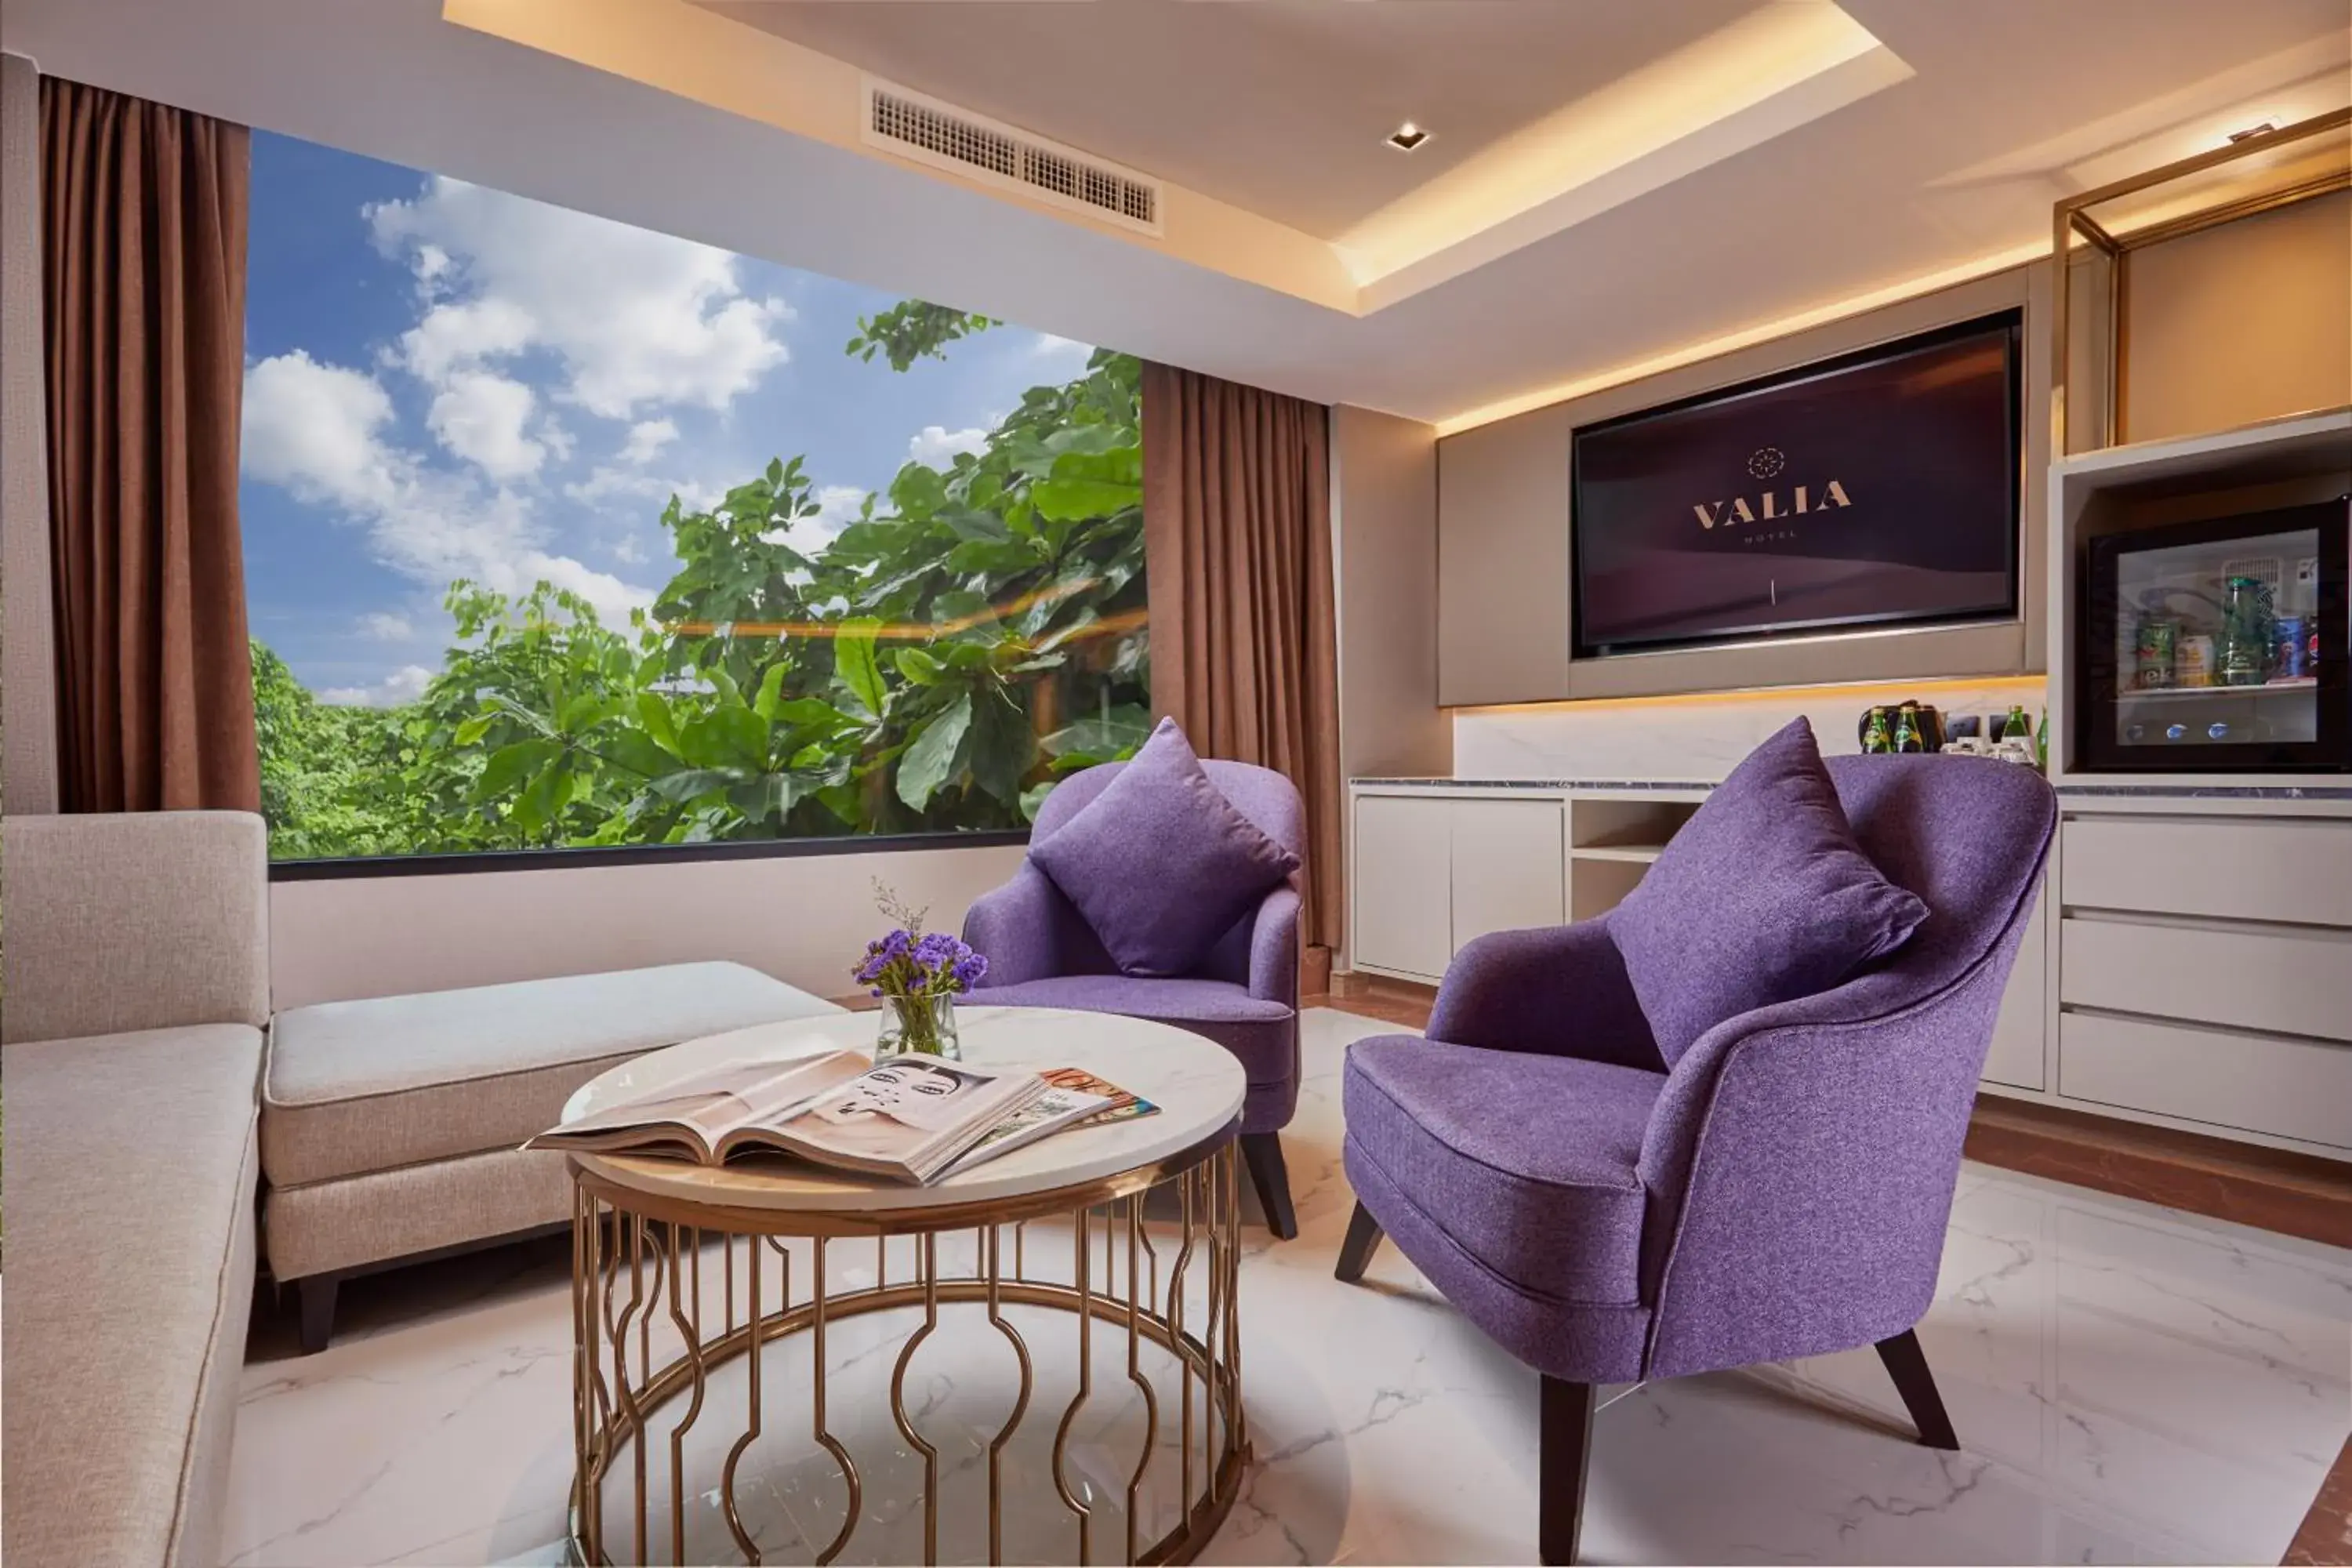 TV and multimedia, Seating Area in Valia Hotel Bangkok